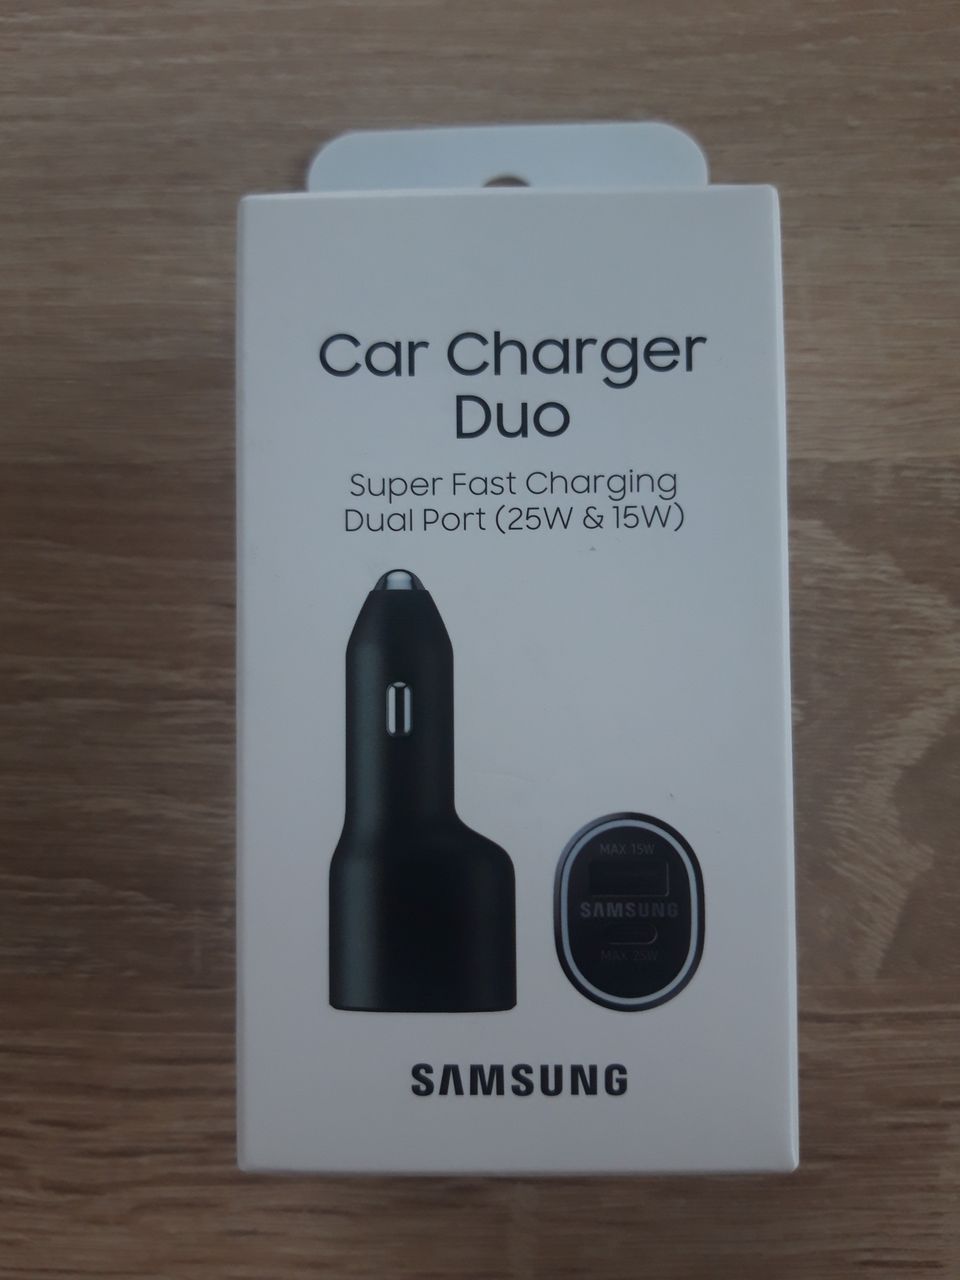 Uusi Samsung 40W Car Charger Duo -autolaturi